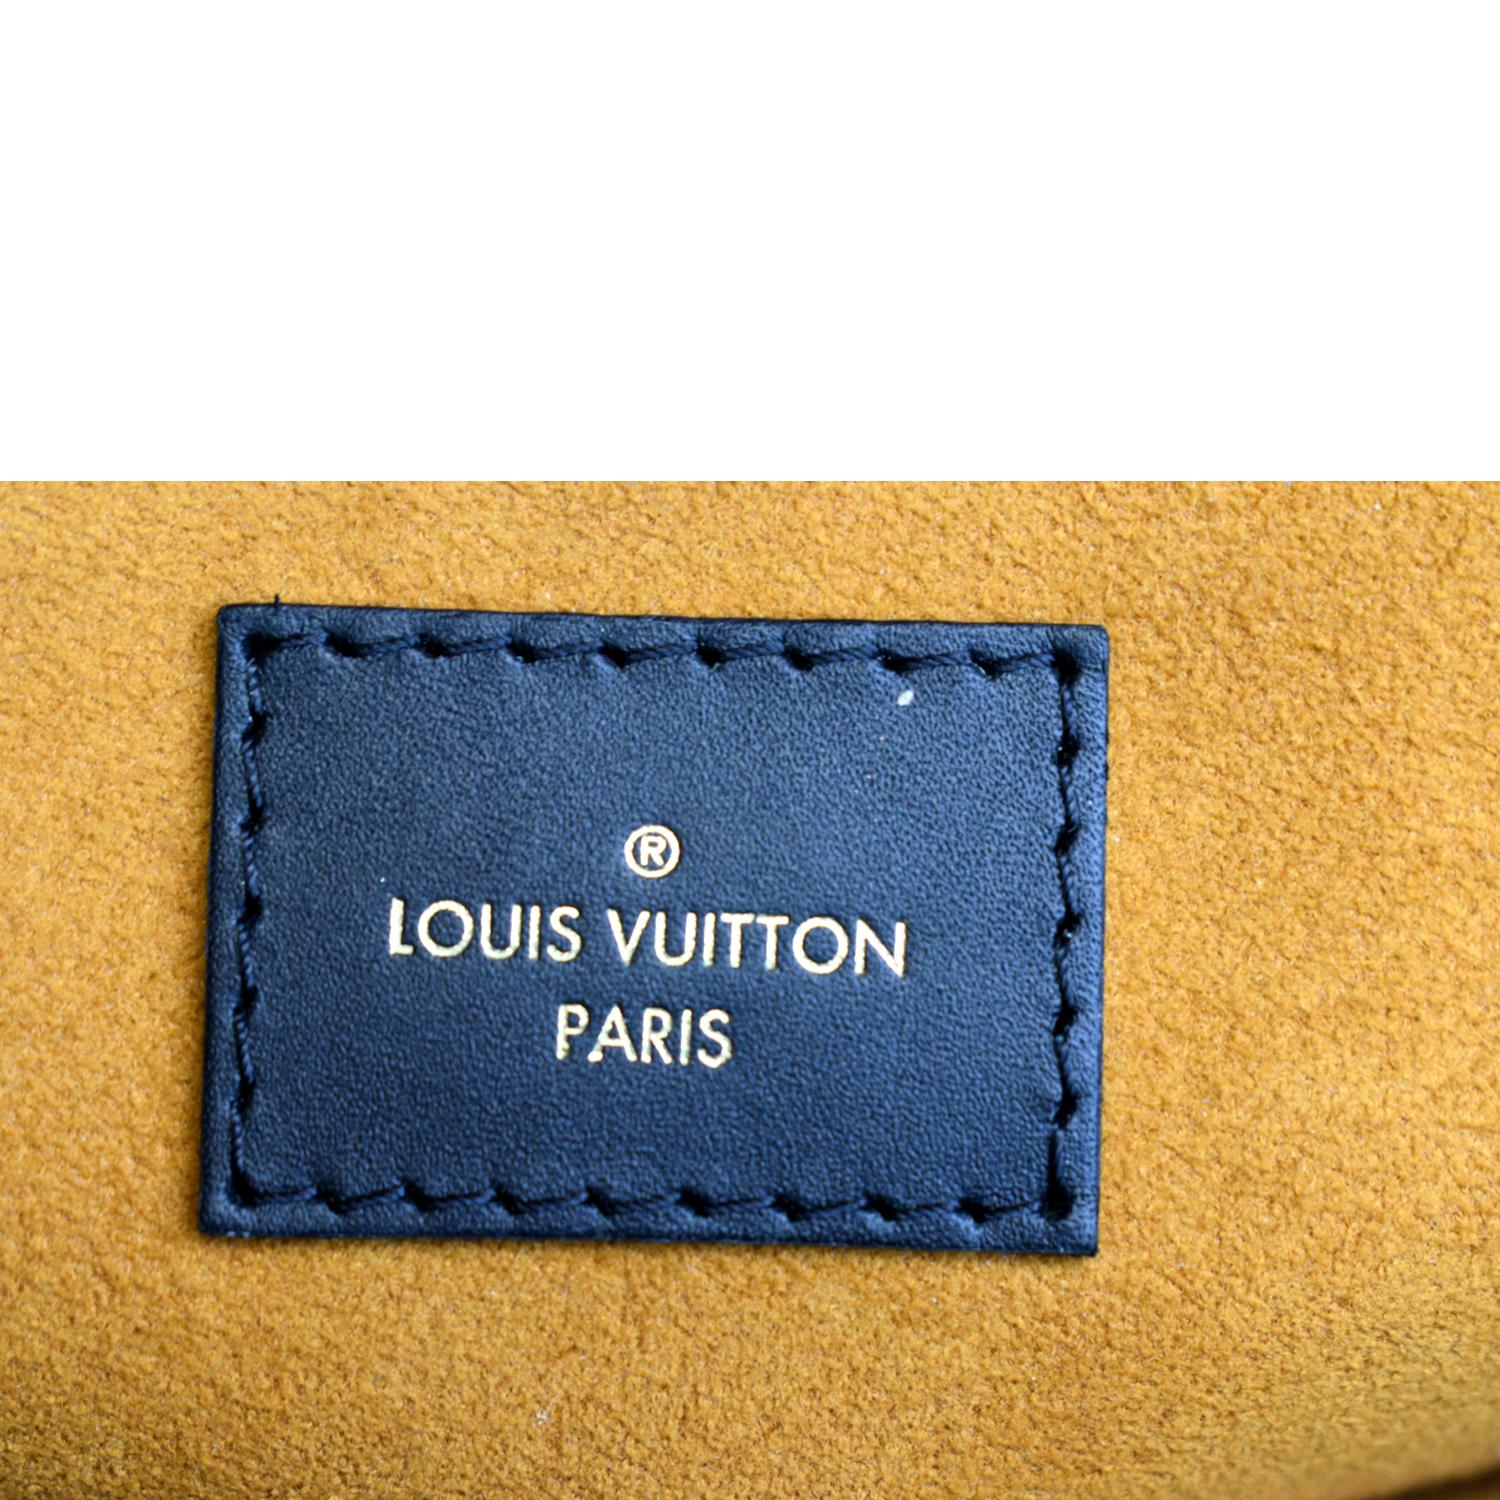 Louis Vuitton Big Logo With White Monogram In High Fashion Blue